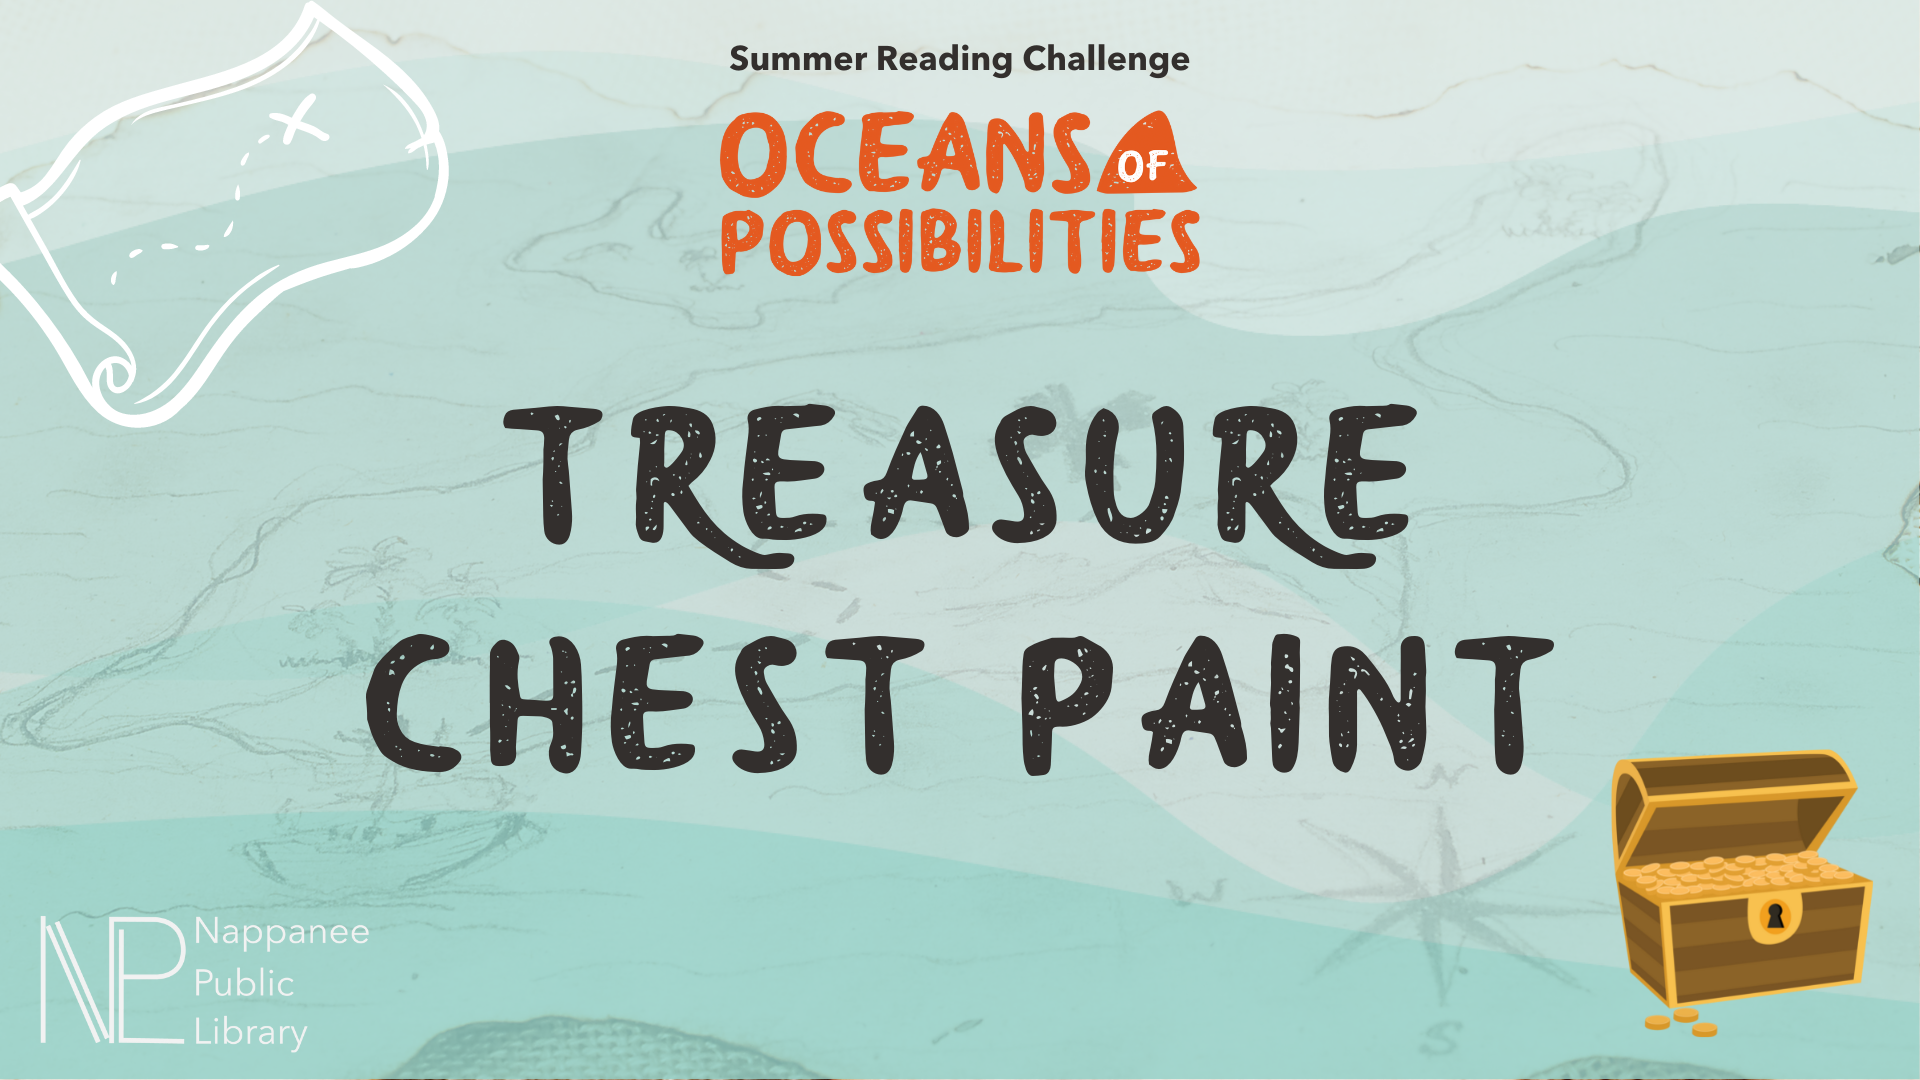 Treasure Chest Paint